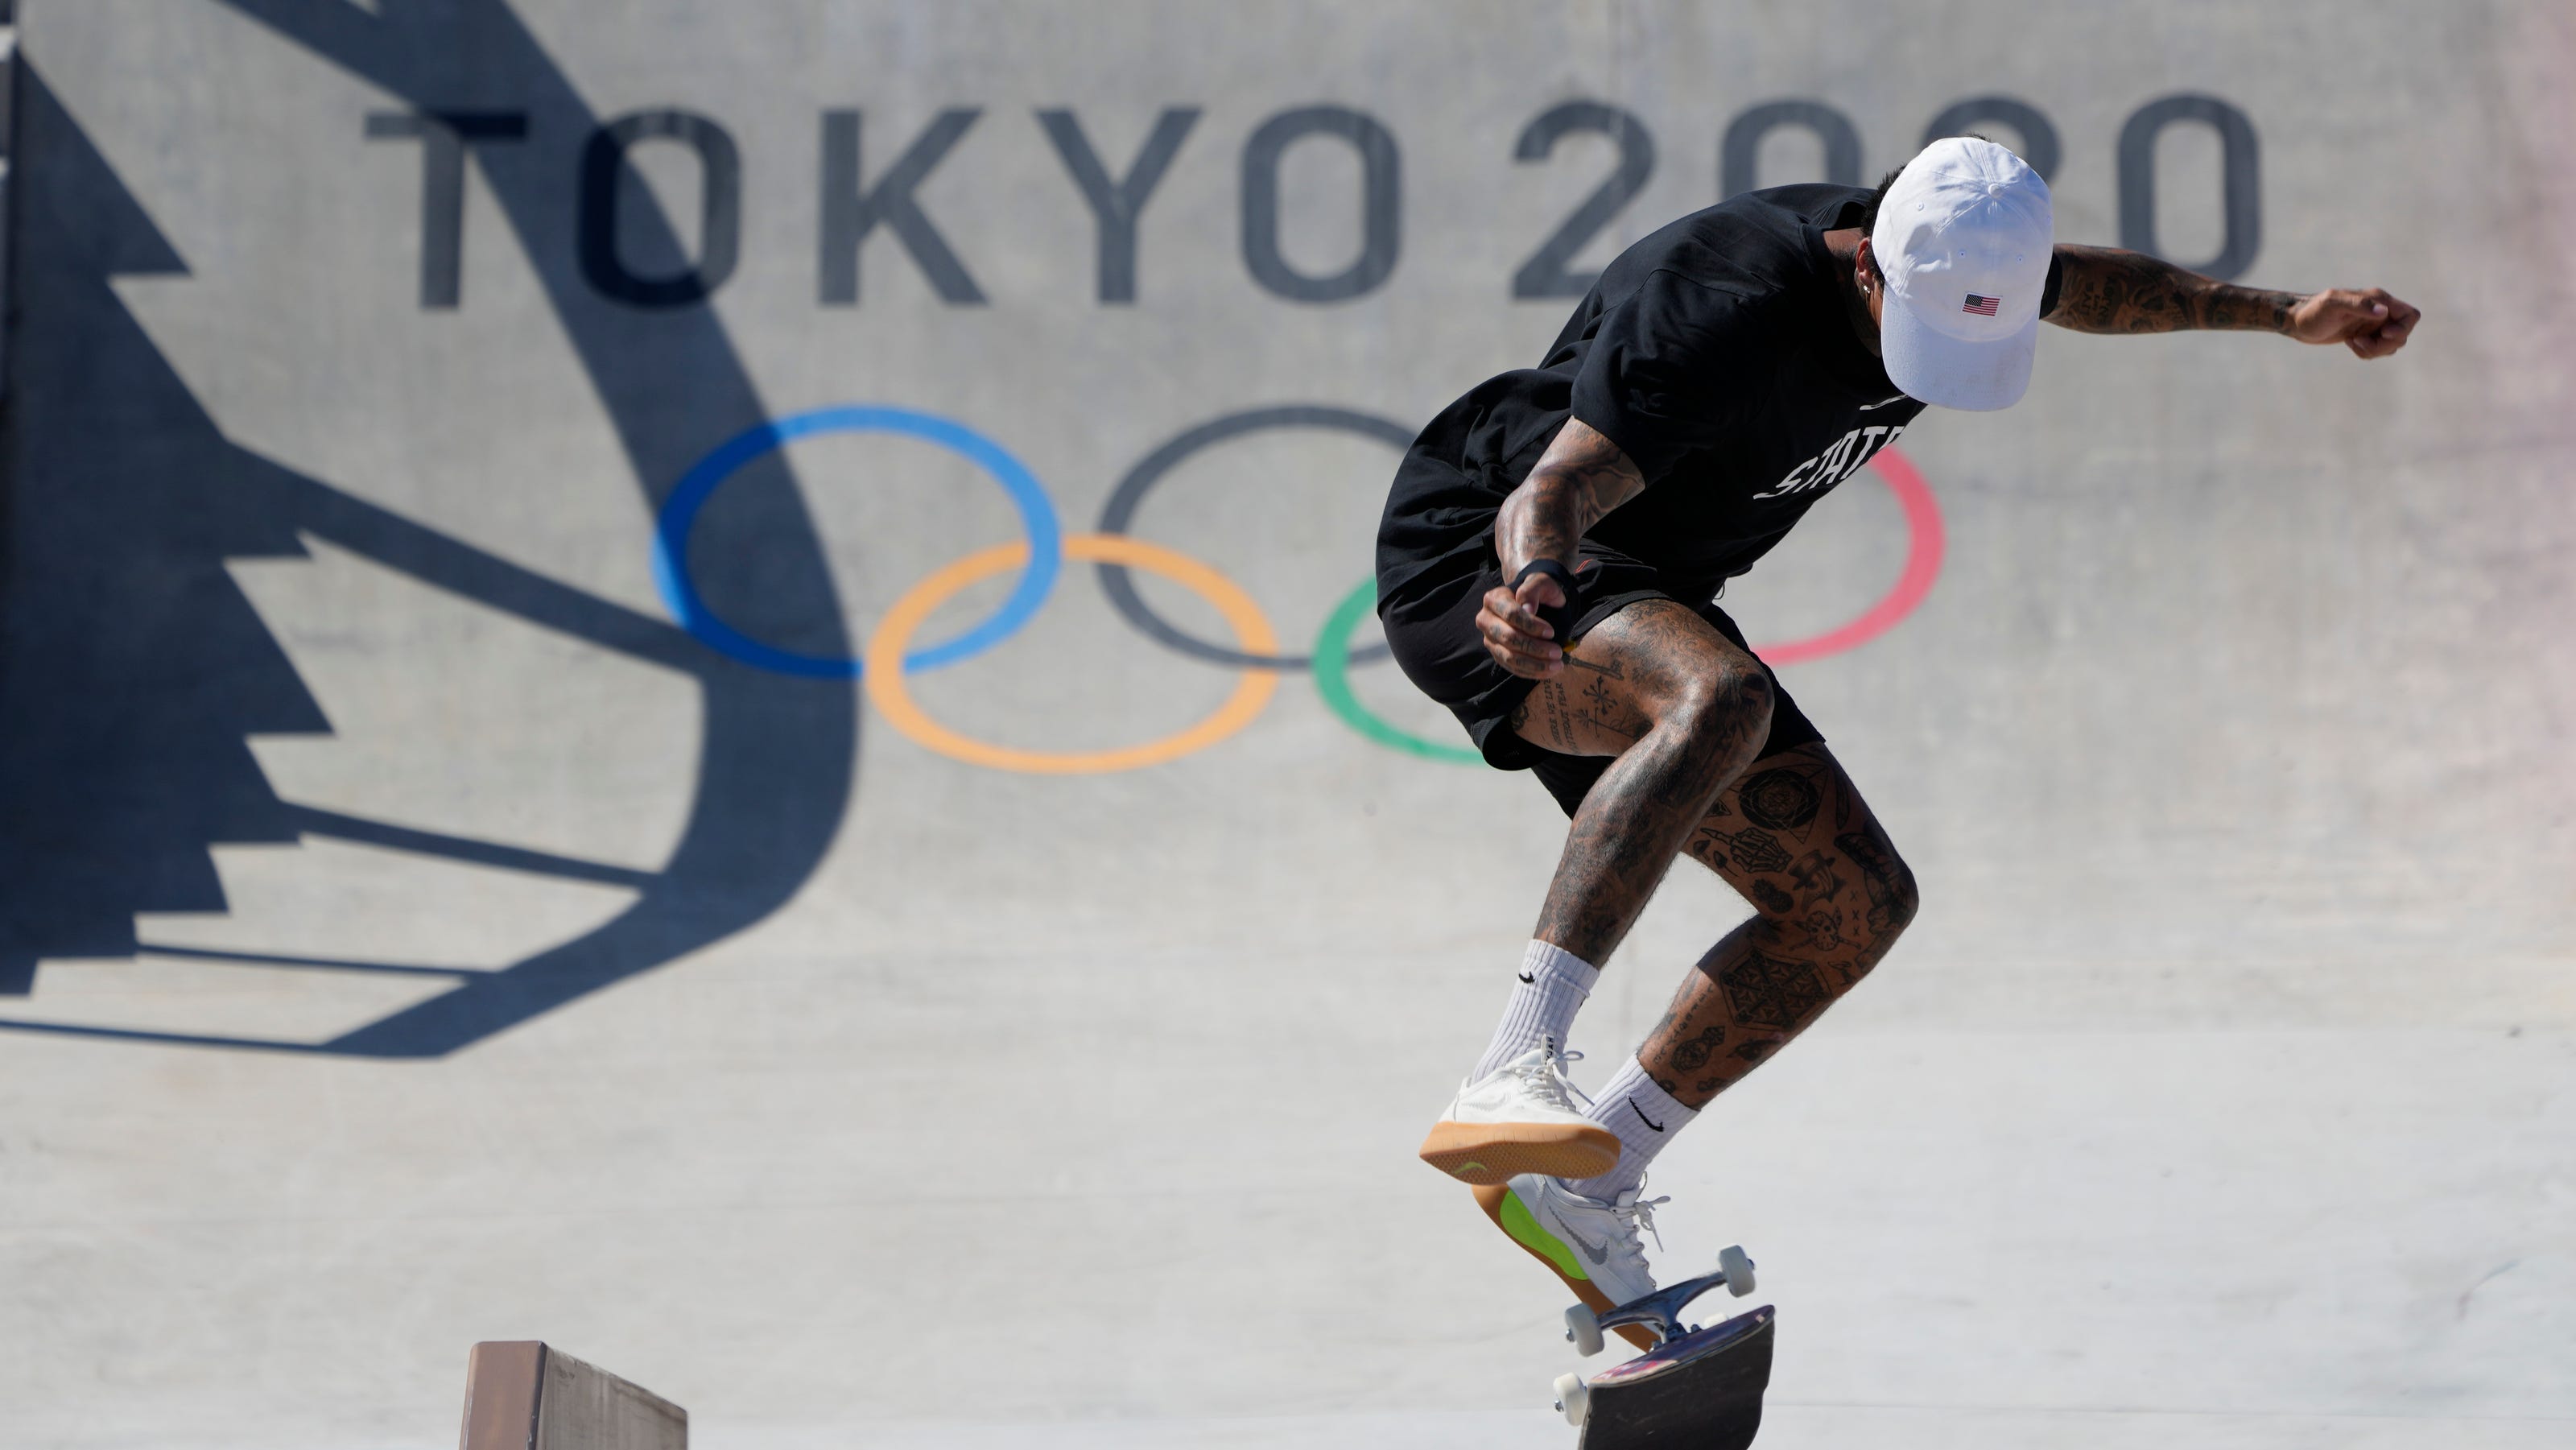 Olympic skateboarding 2021